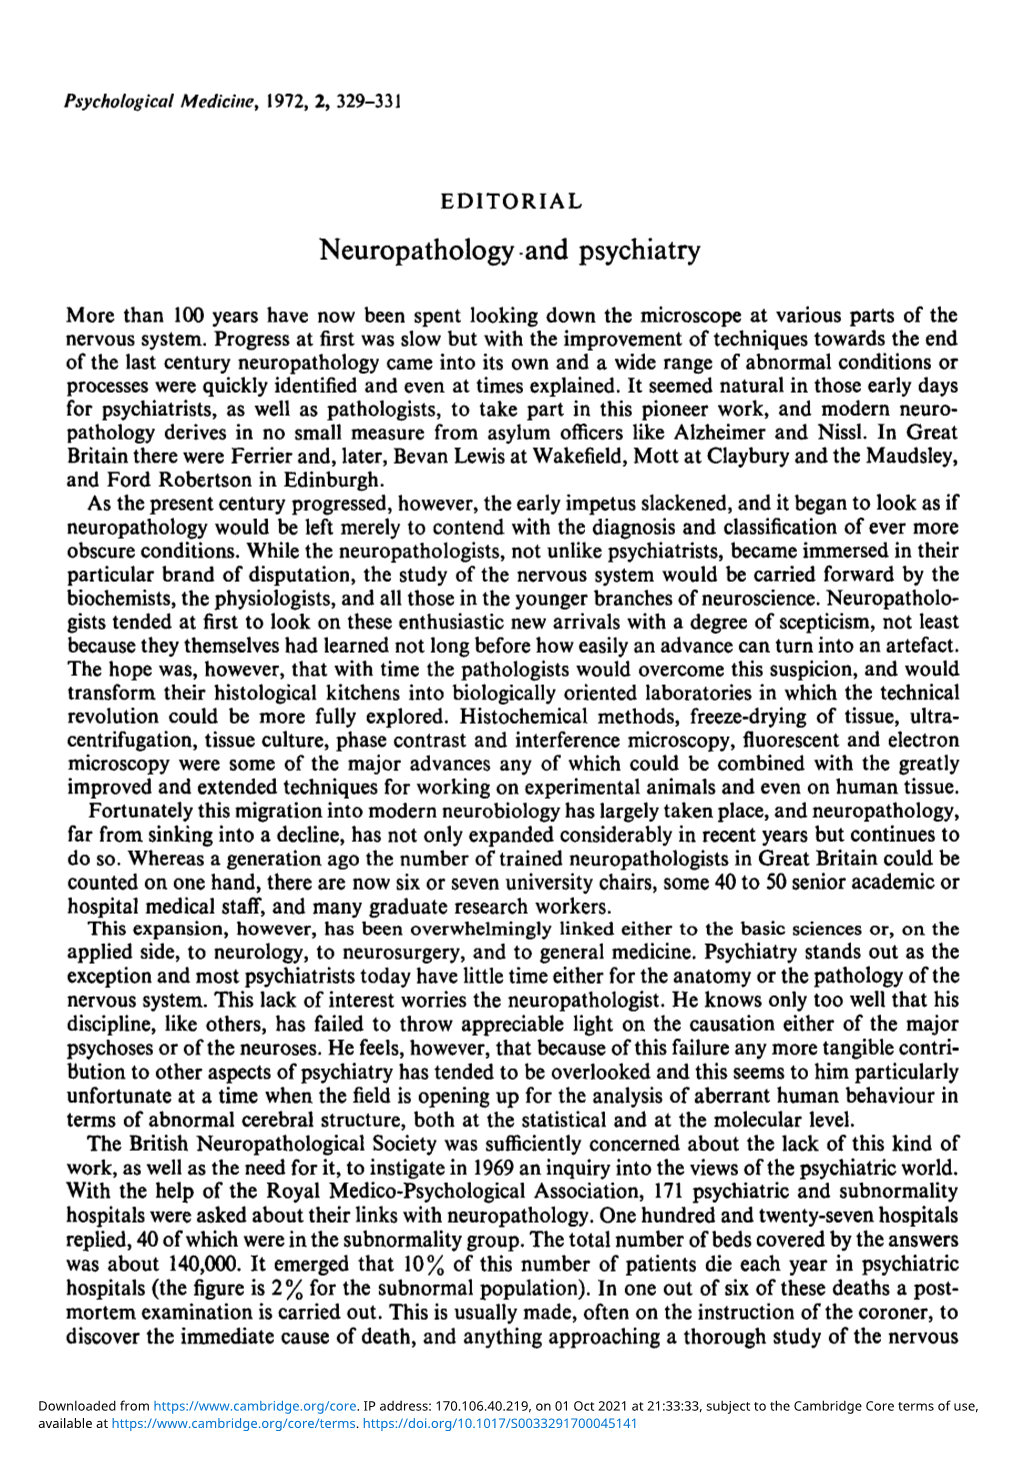 Neuropathology and Psychiatry